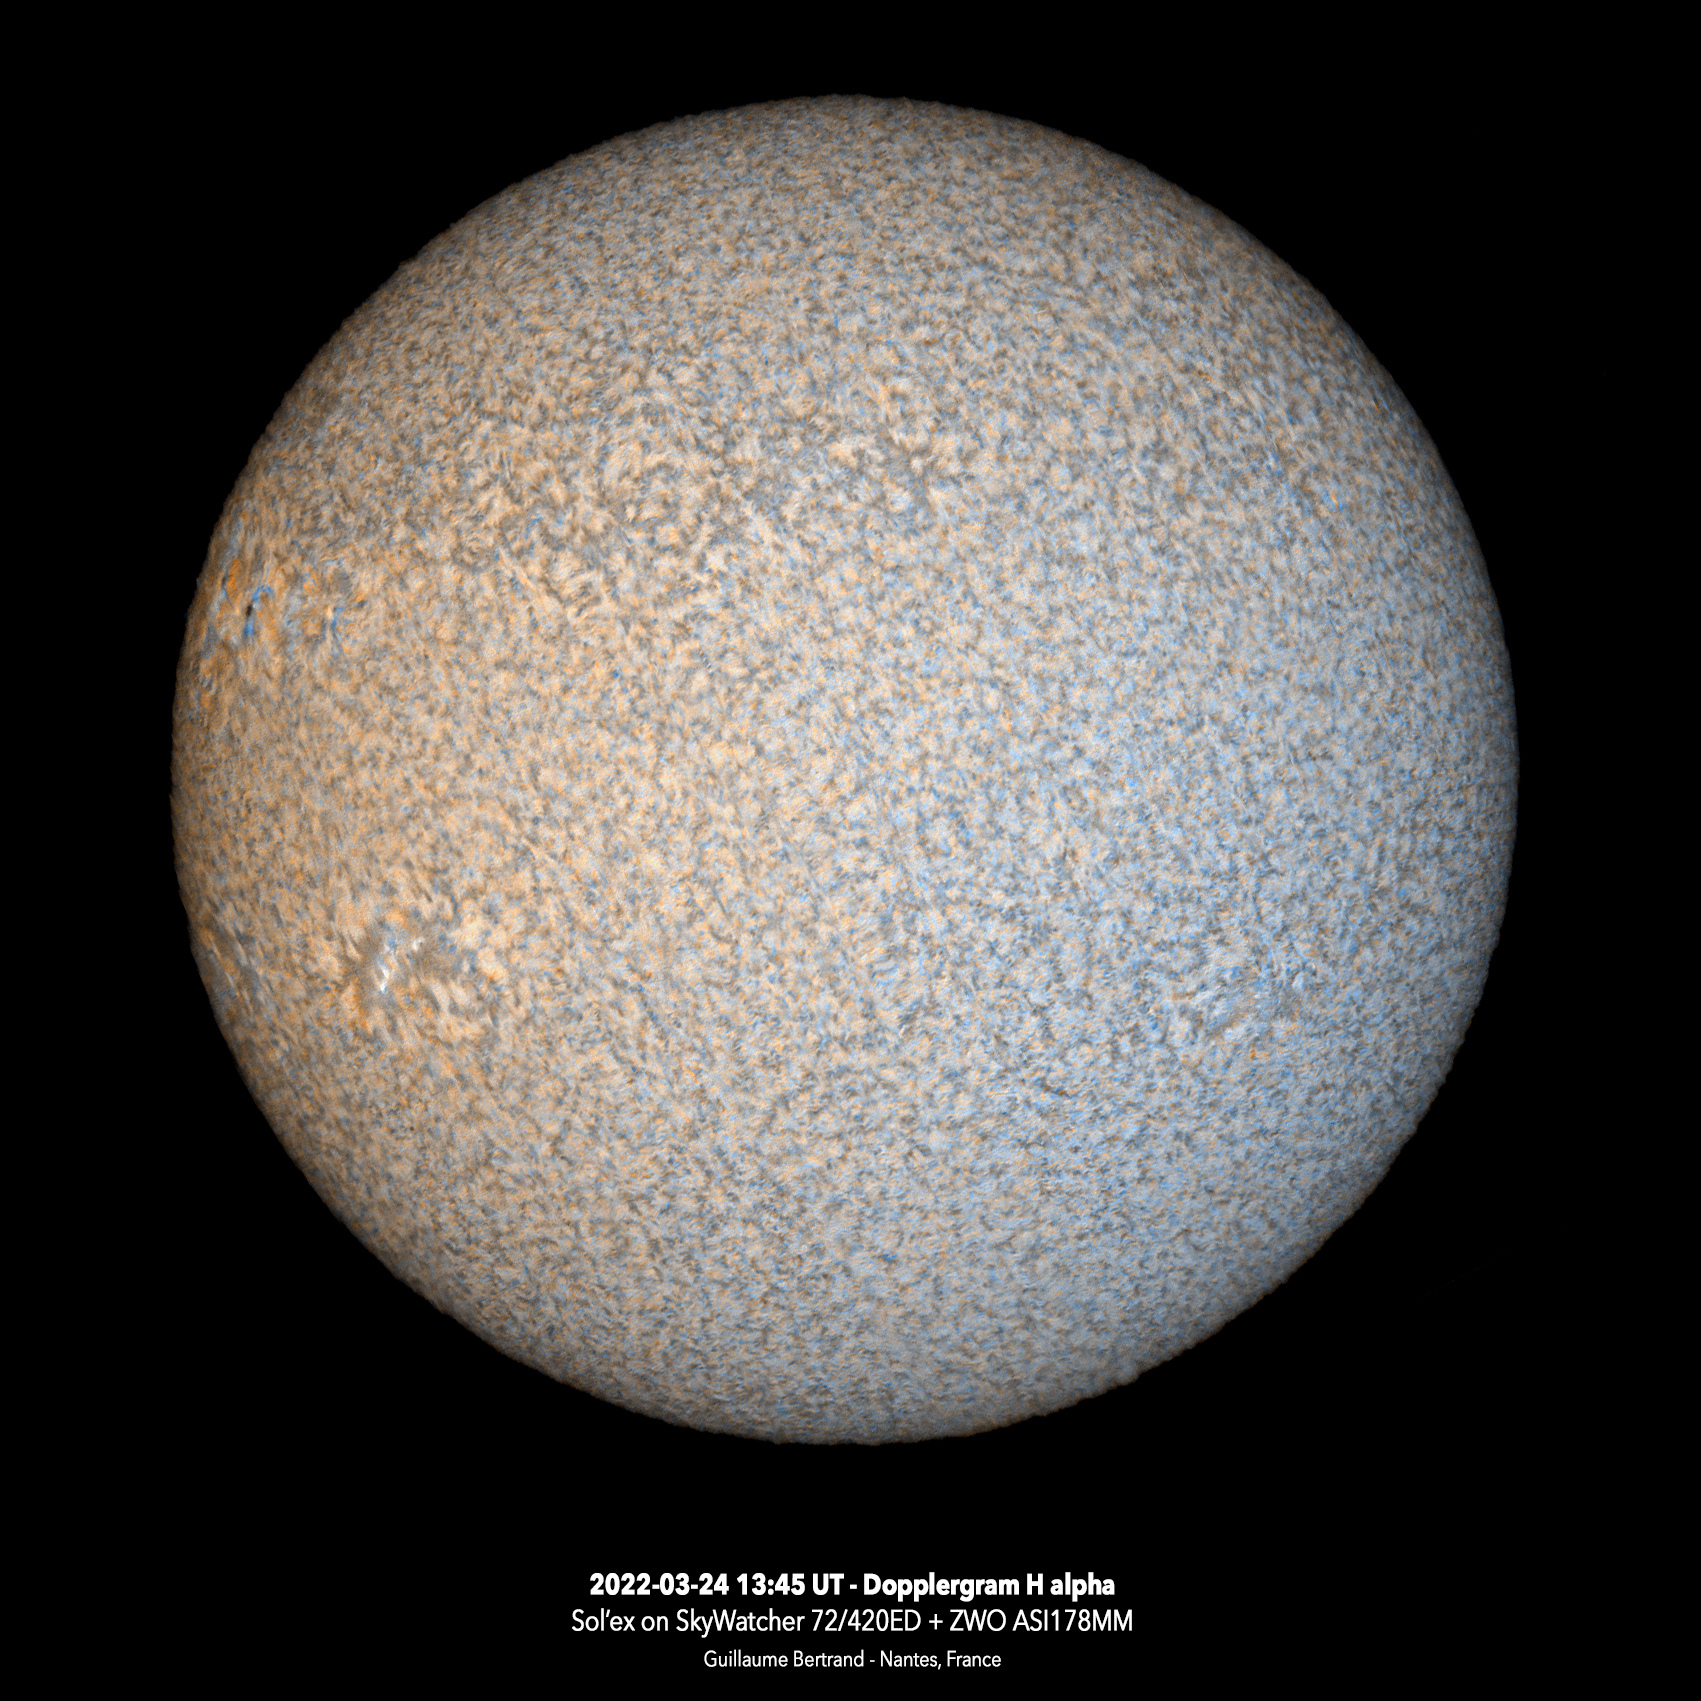 sun-20220324-13_45_halpha_doppler.jpg.b12fb1254cc378fbefc94cde698f6eef.jpg